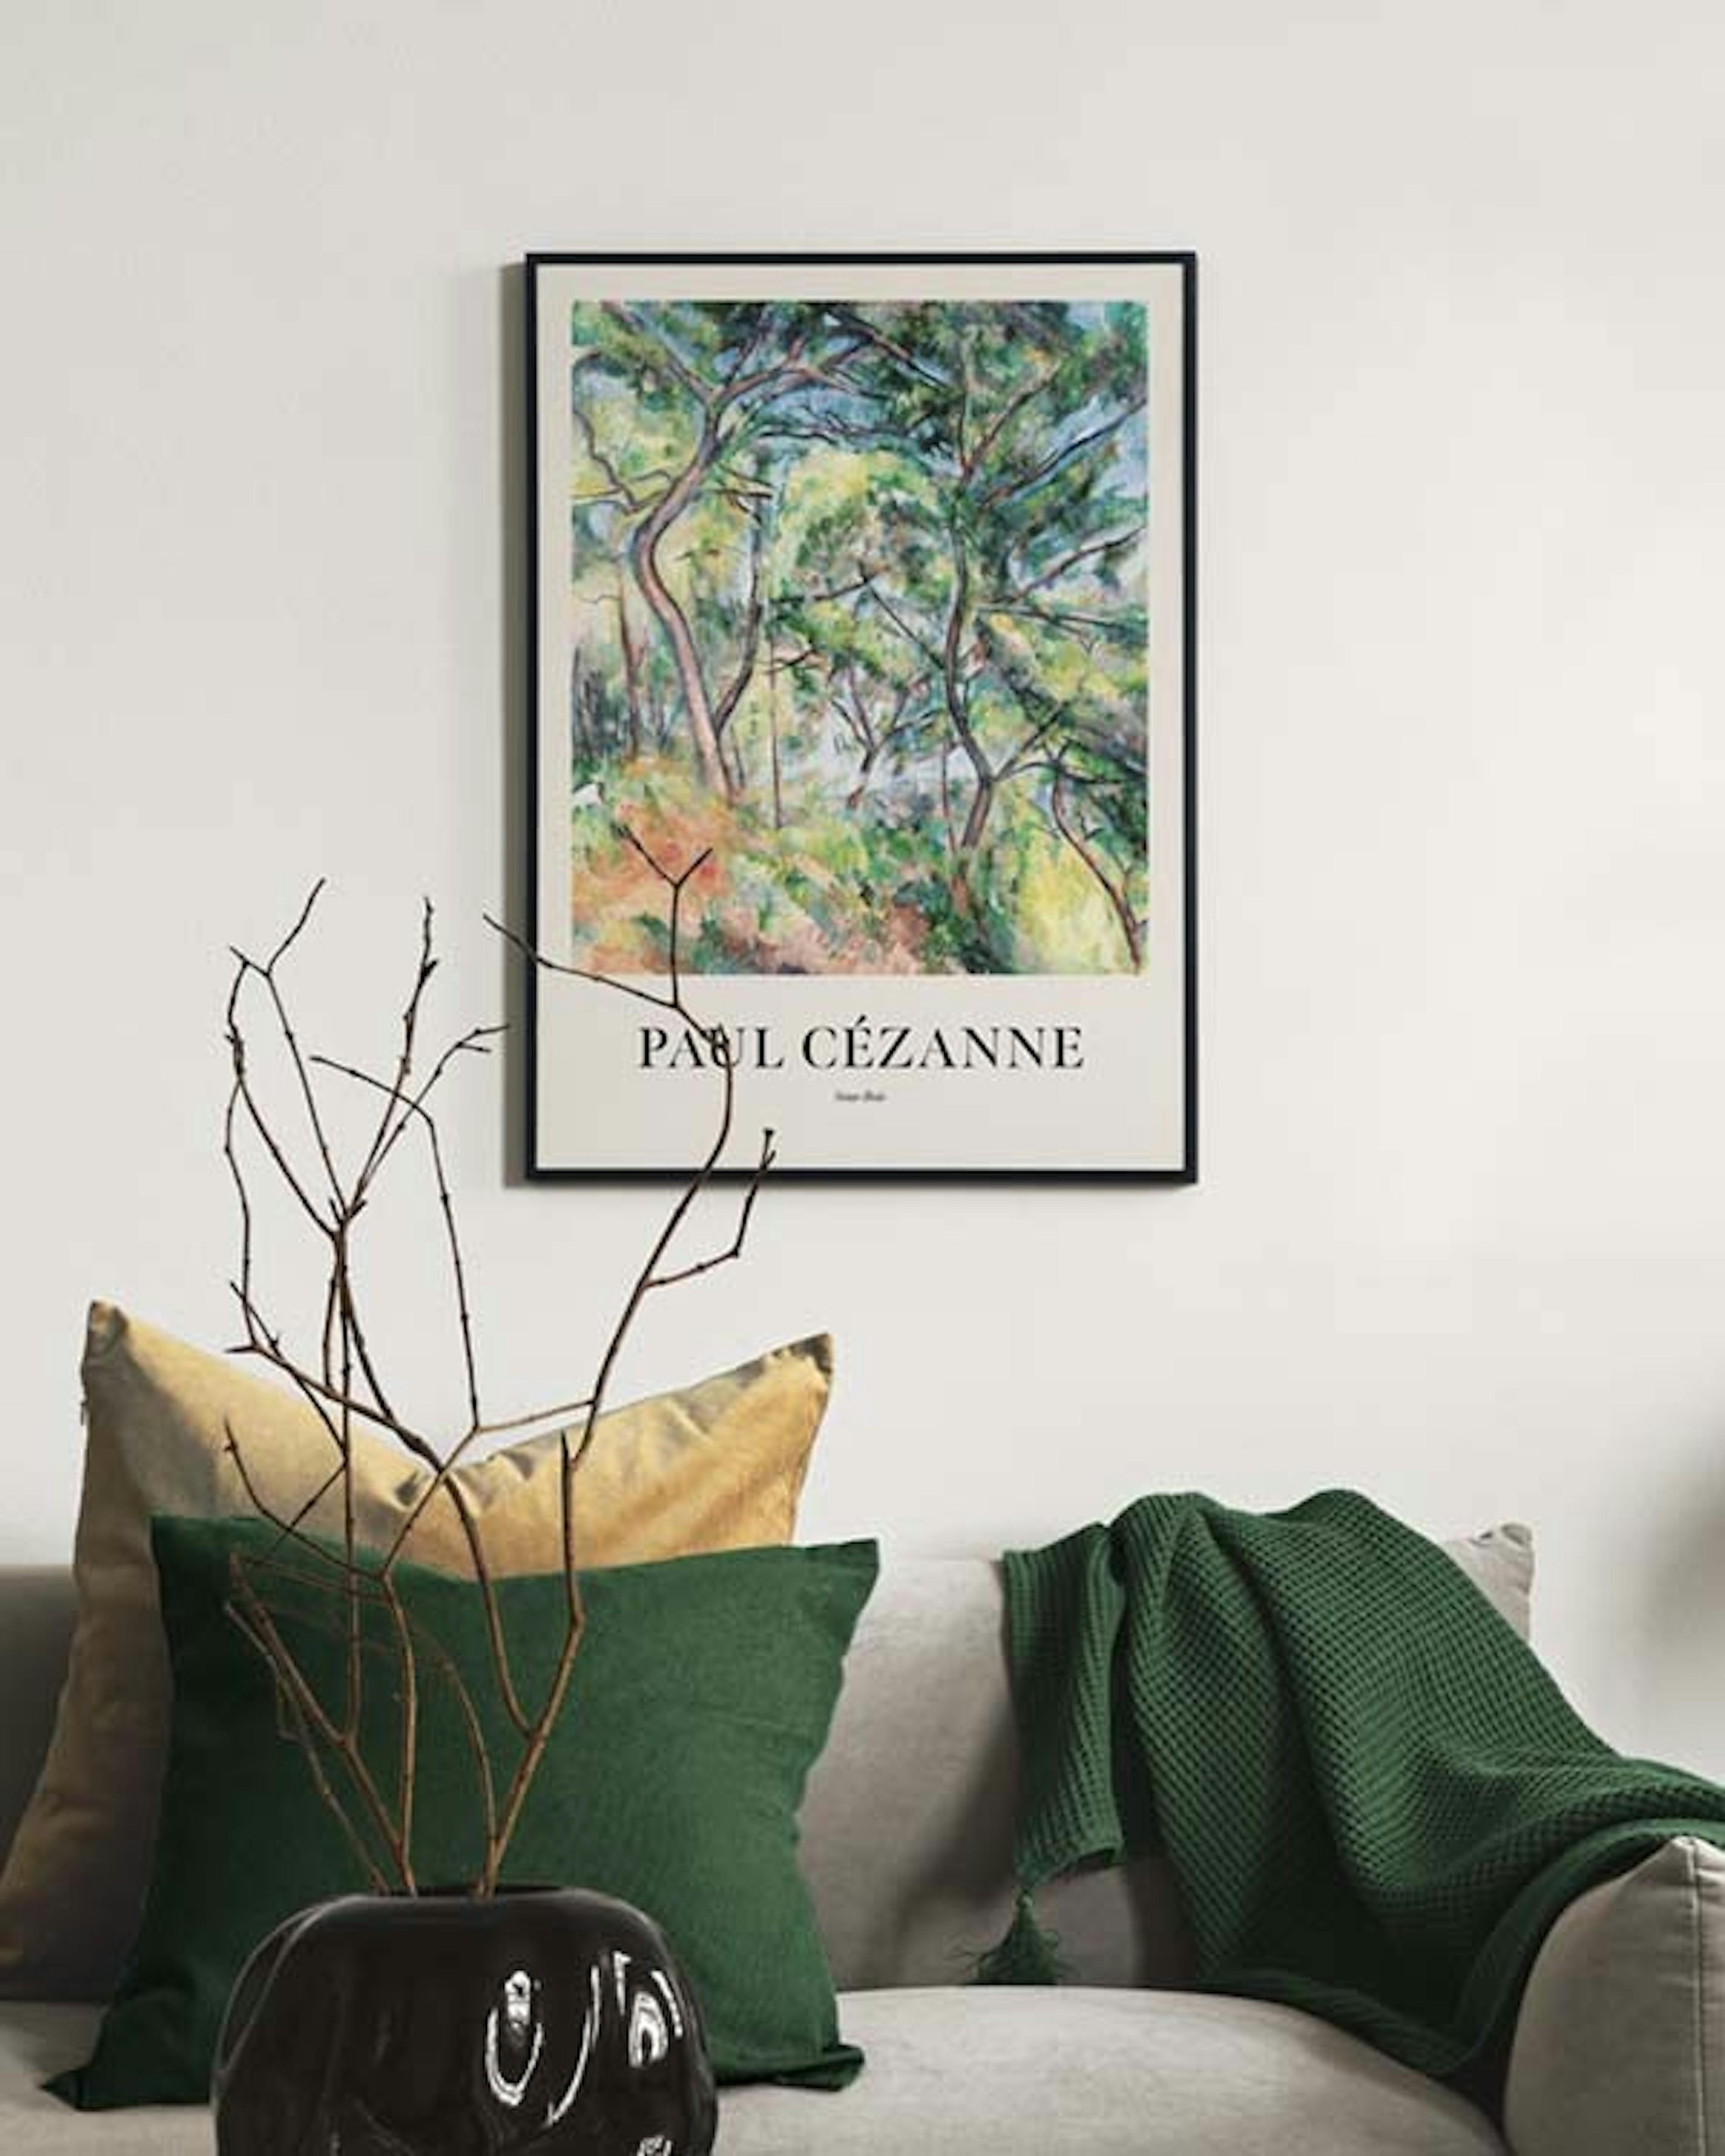 Paul Cézanne - Sous-Bois Print